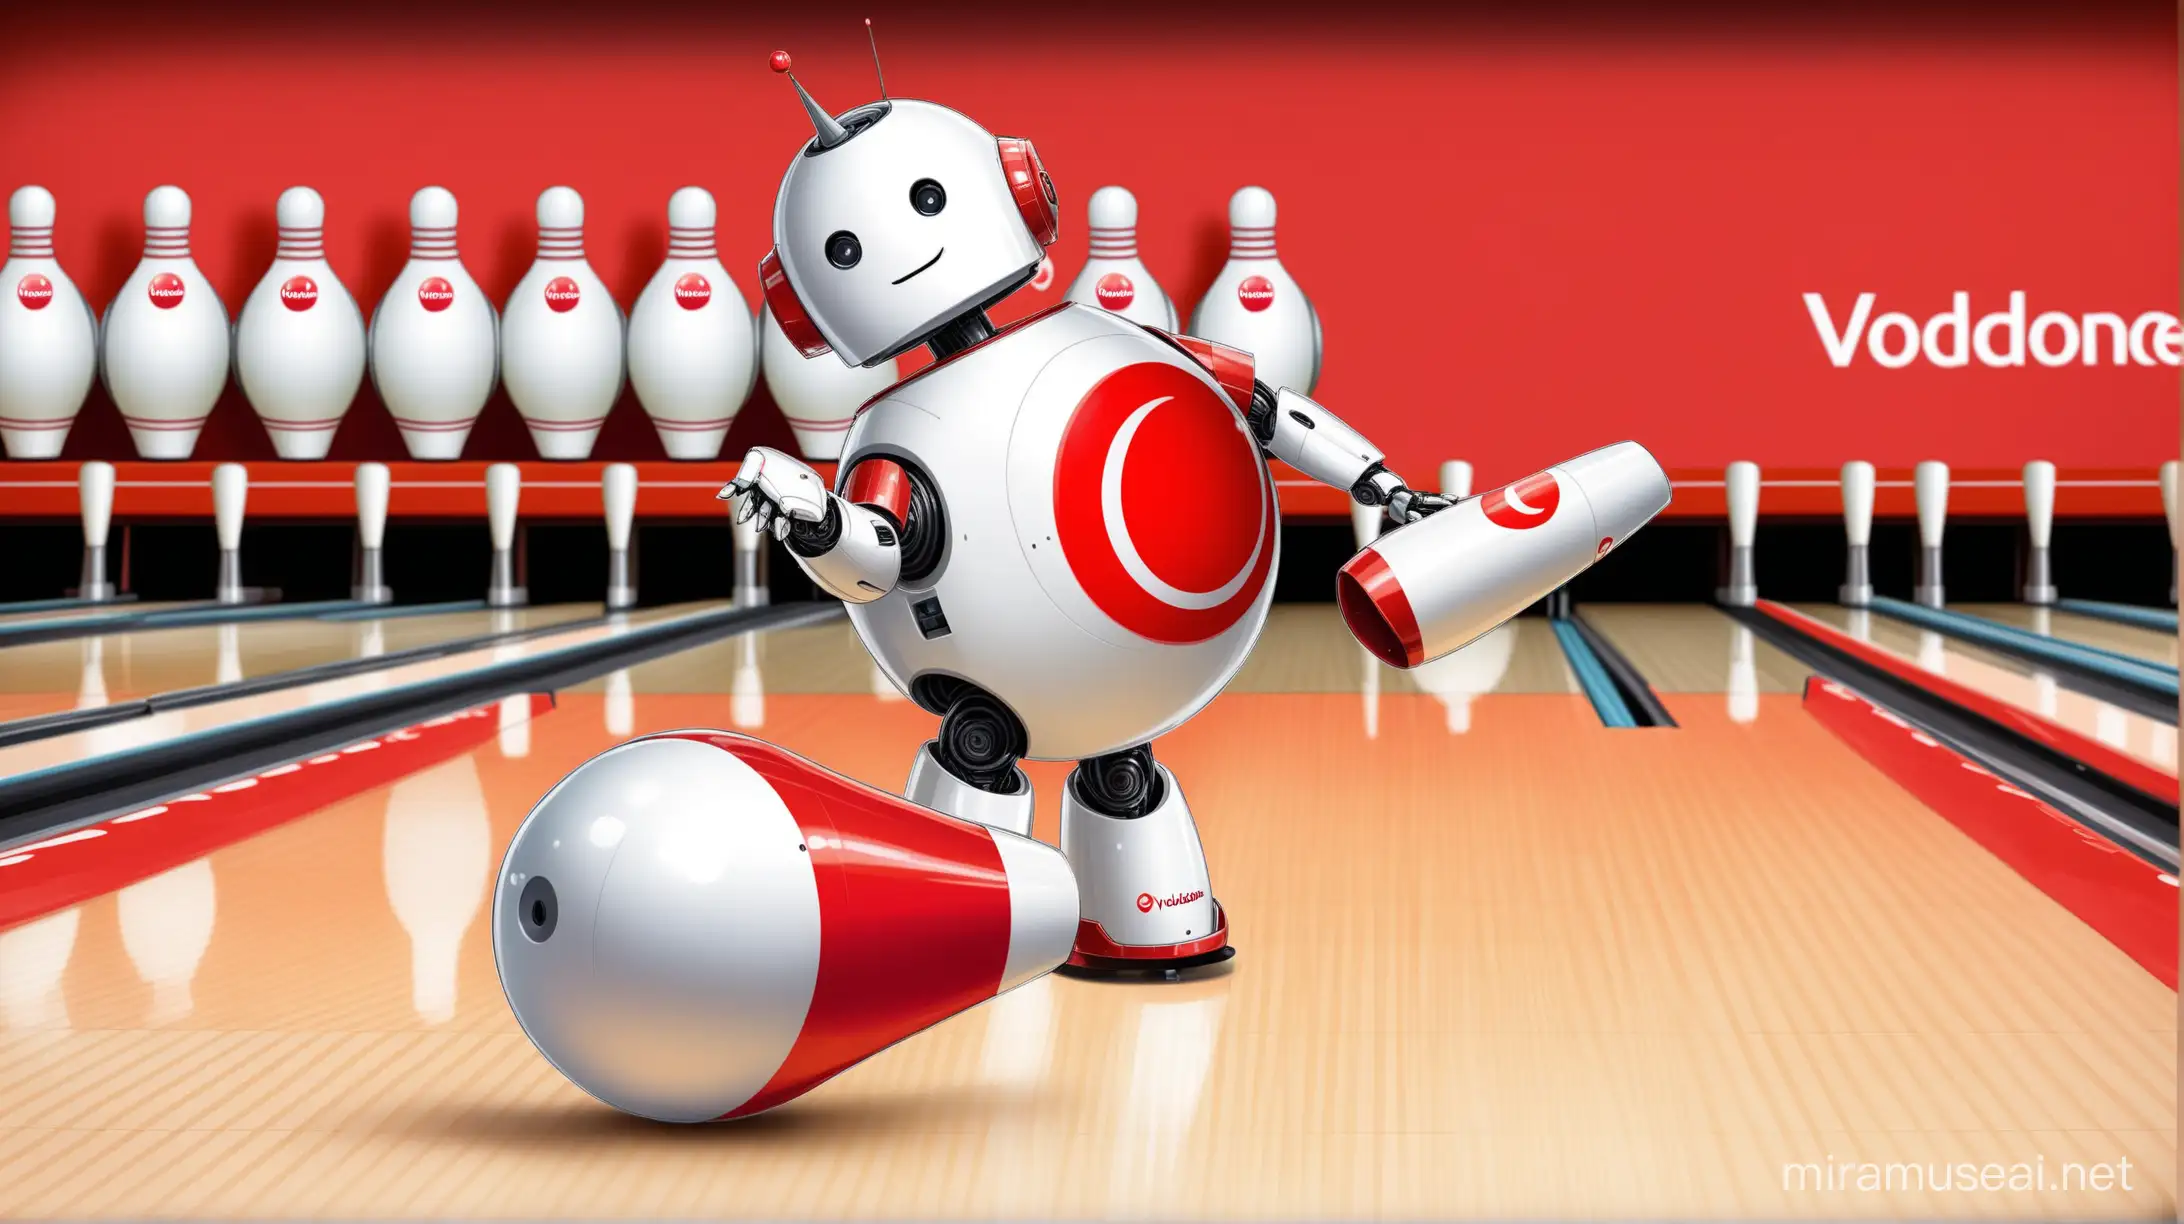 Vodafone tobi robot bowling a strike  and celebrating